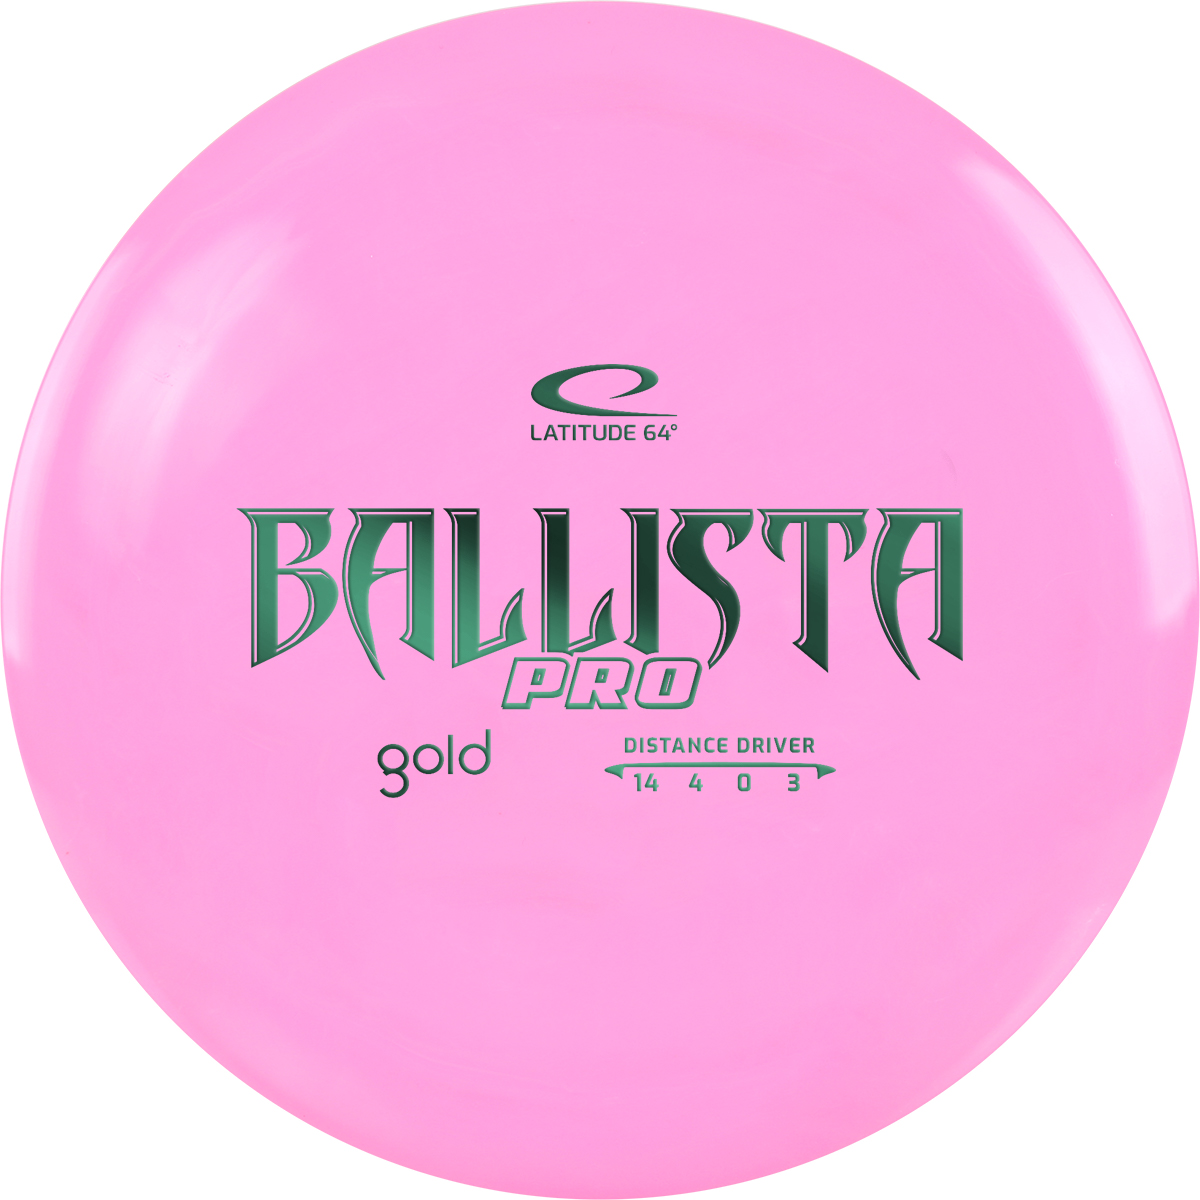 Latitude 64 – Gold Line Ballista Pro